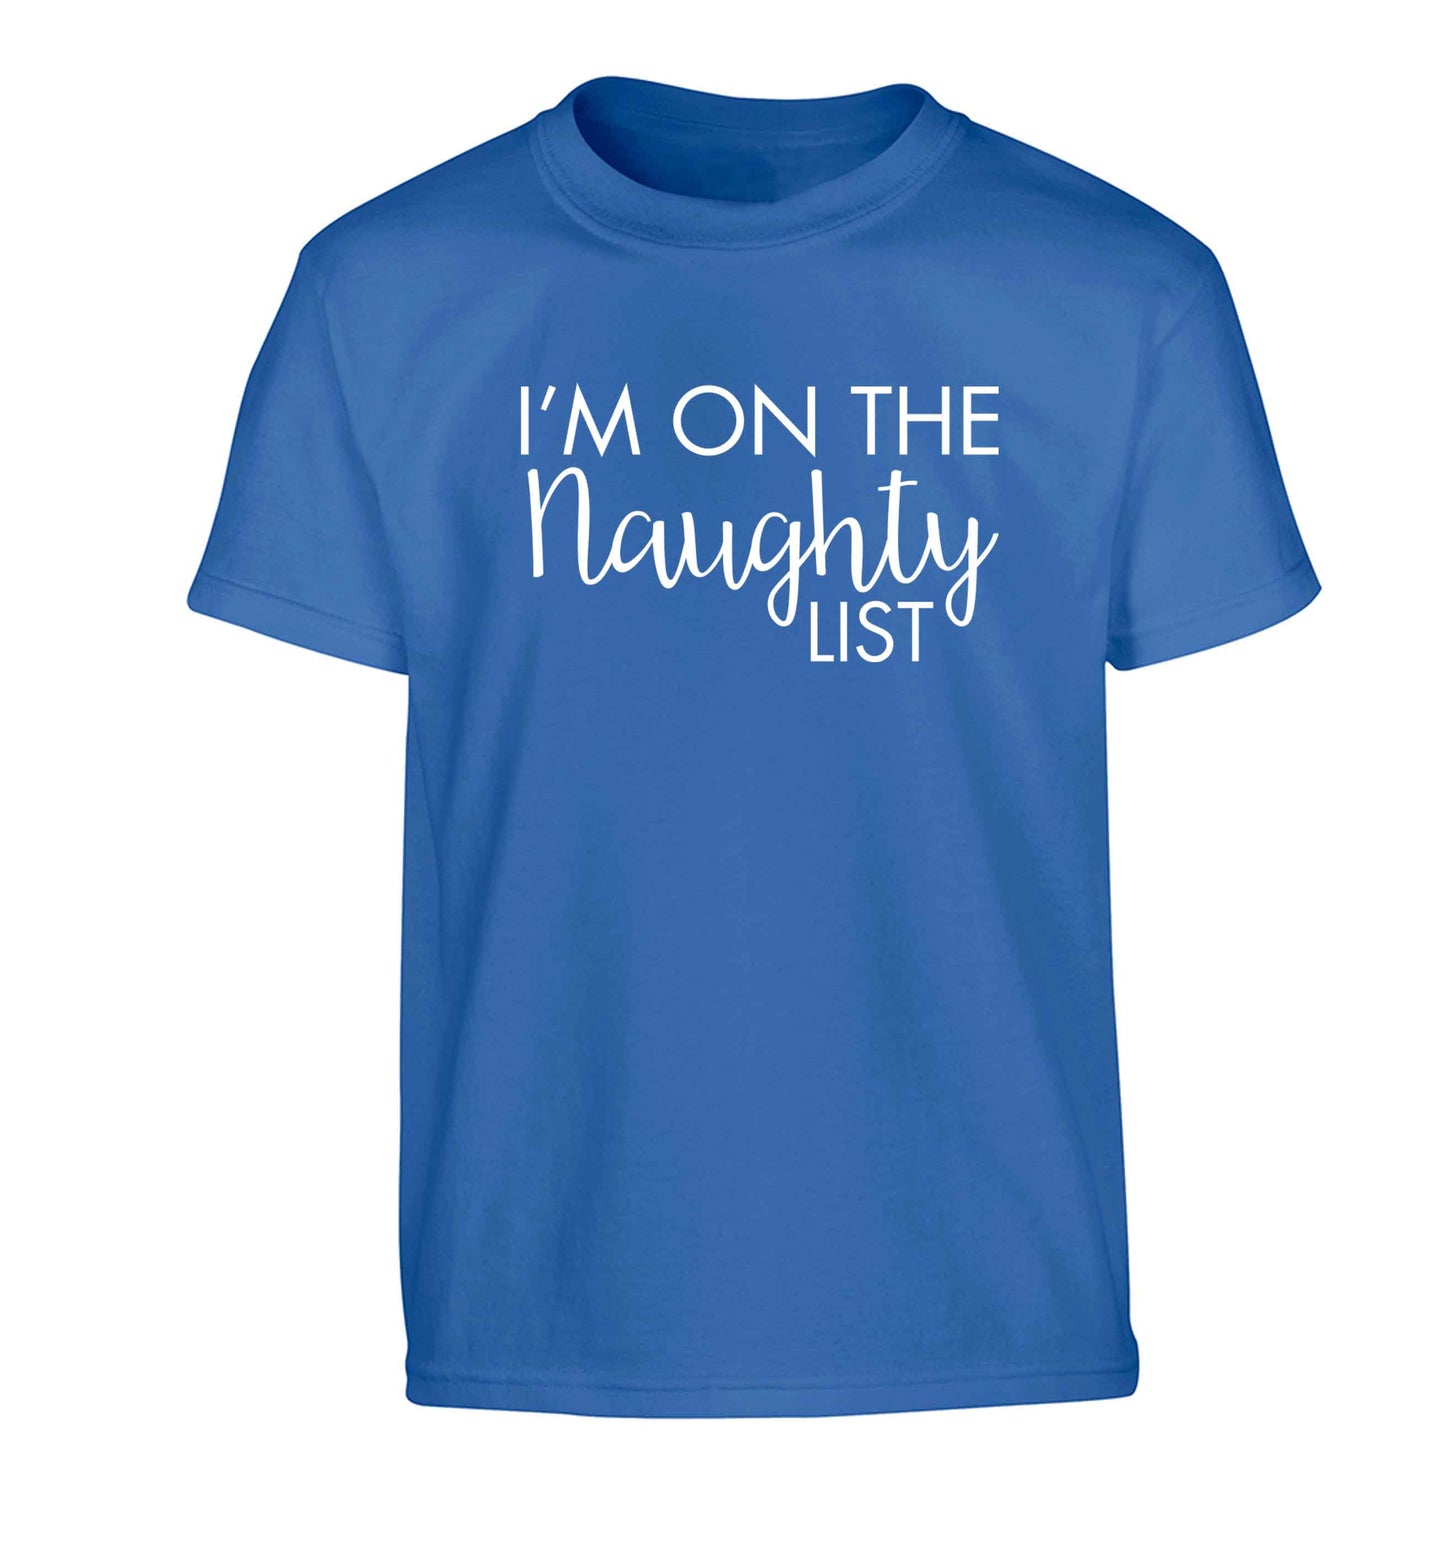 I'm on the naughty list Children's blue Tshirt 12-13 Years